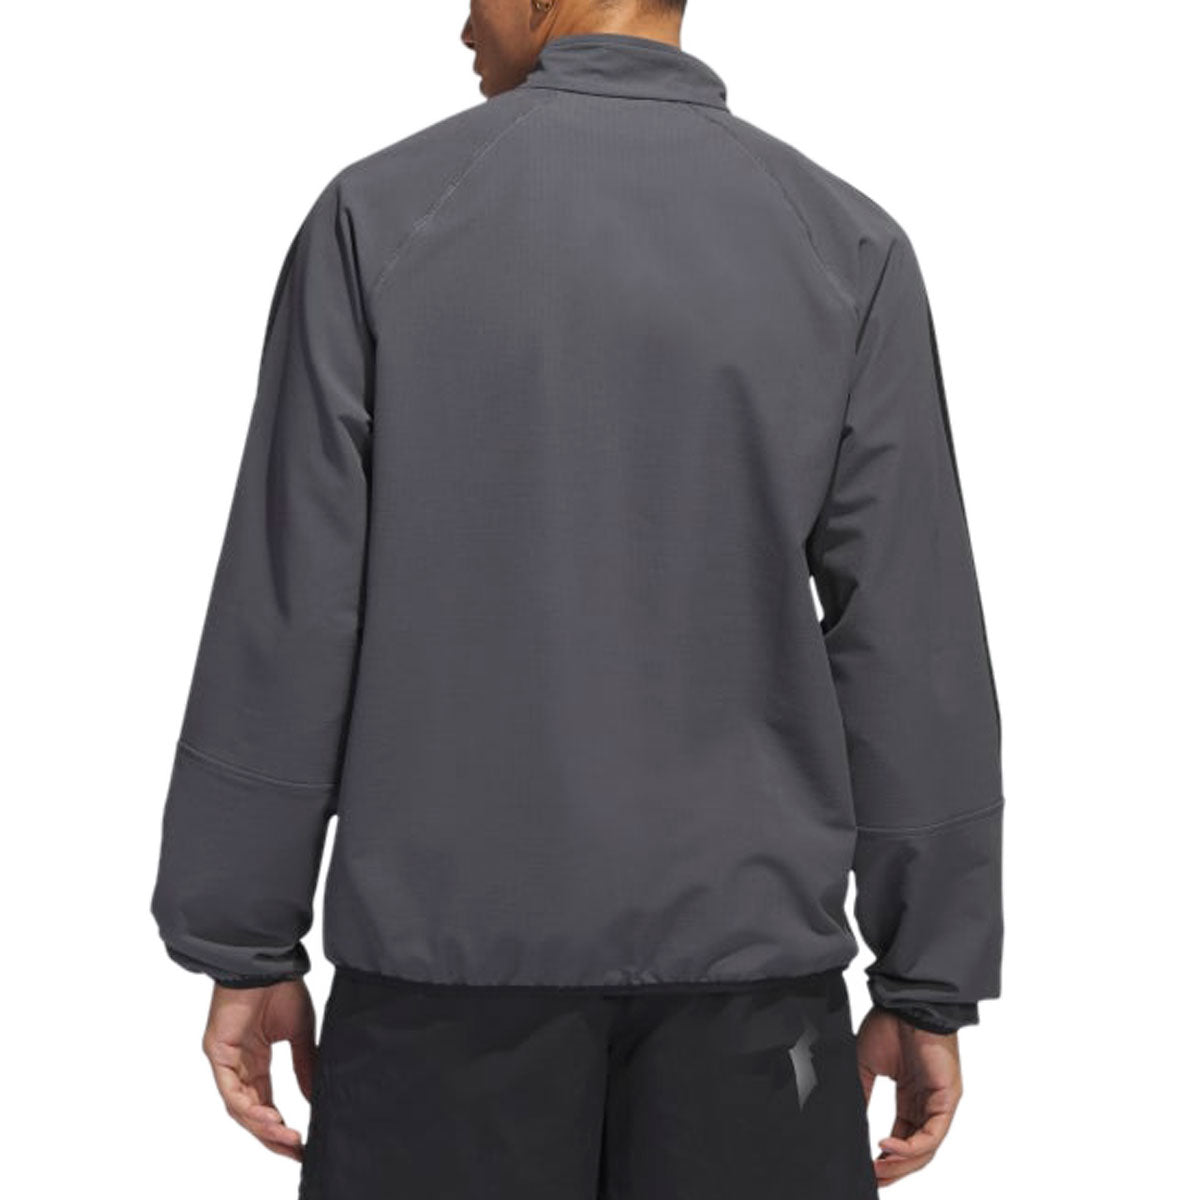 Adidas x Pop Thermal Long Sleeve Shirt - Grey/Black image 2